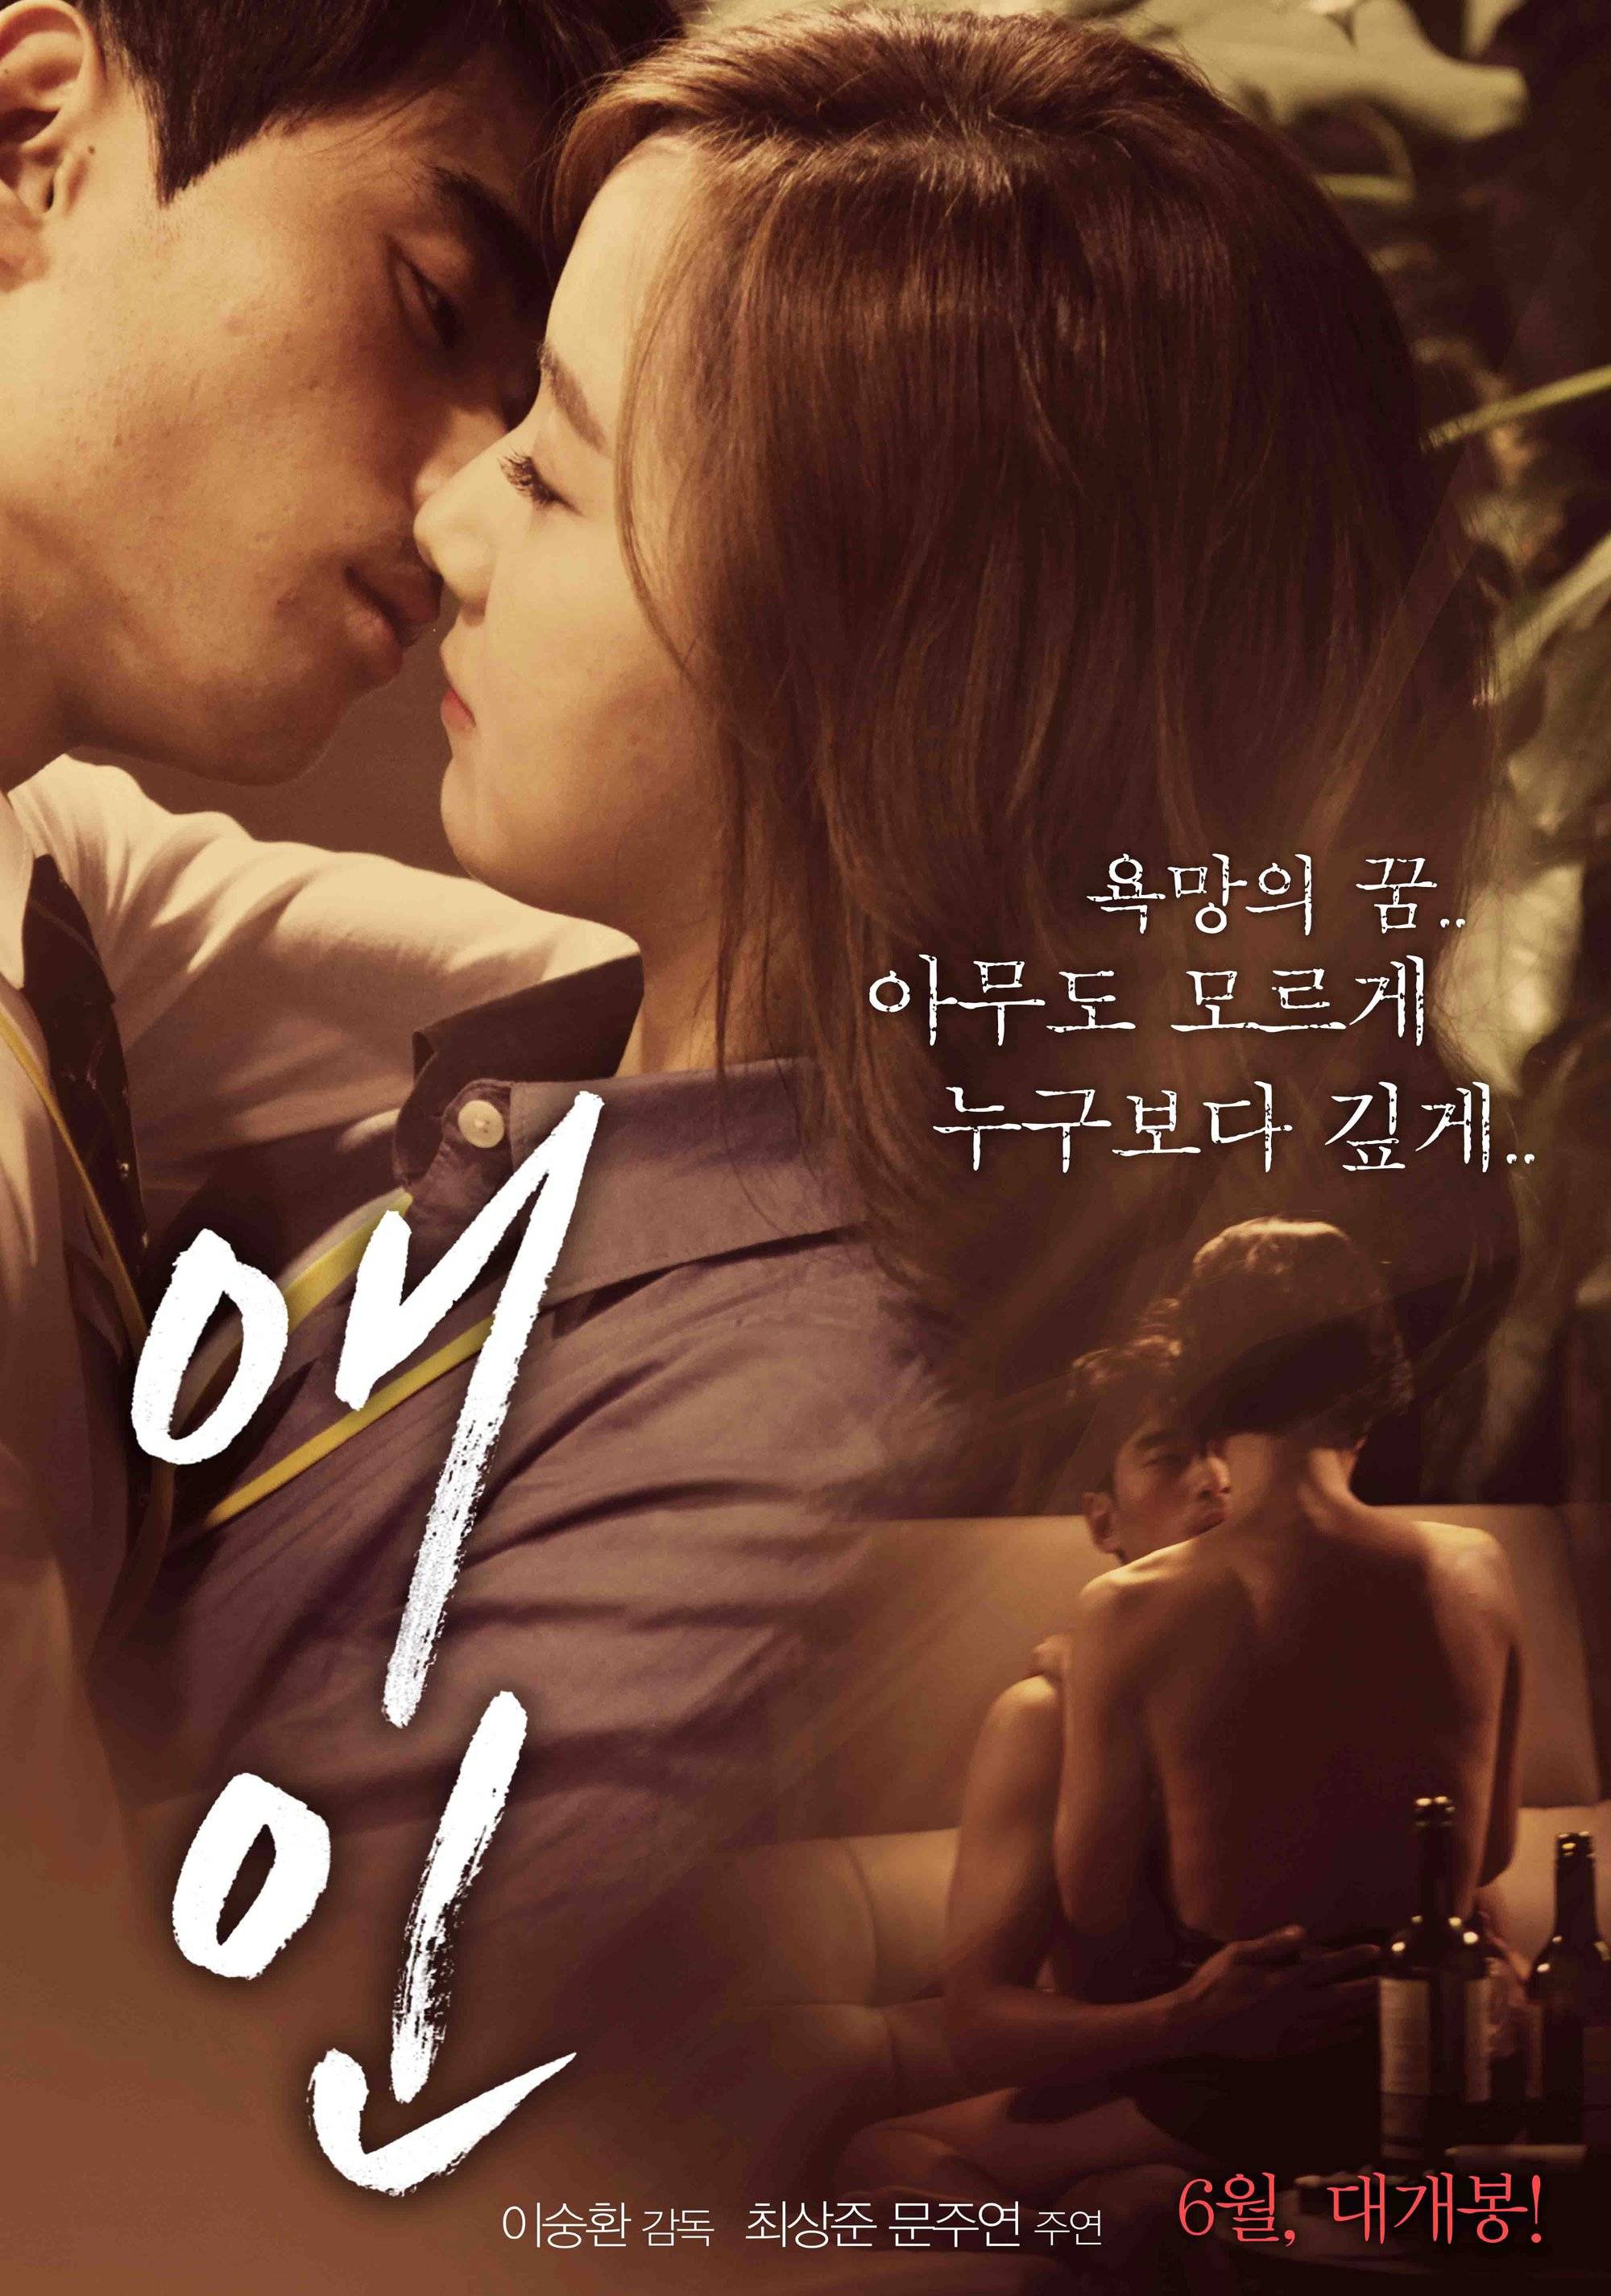 Korean Movies Opening Today 2015 06 11 In Korea HanCinema The